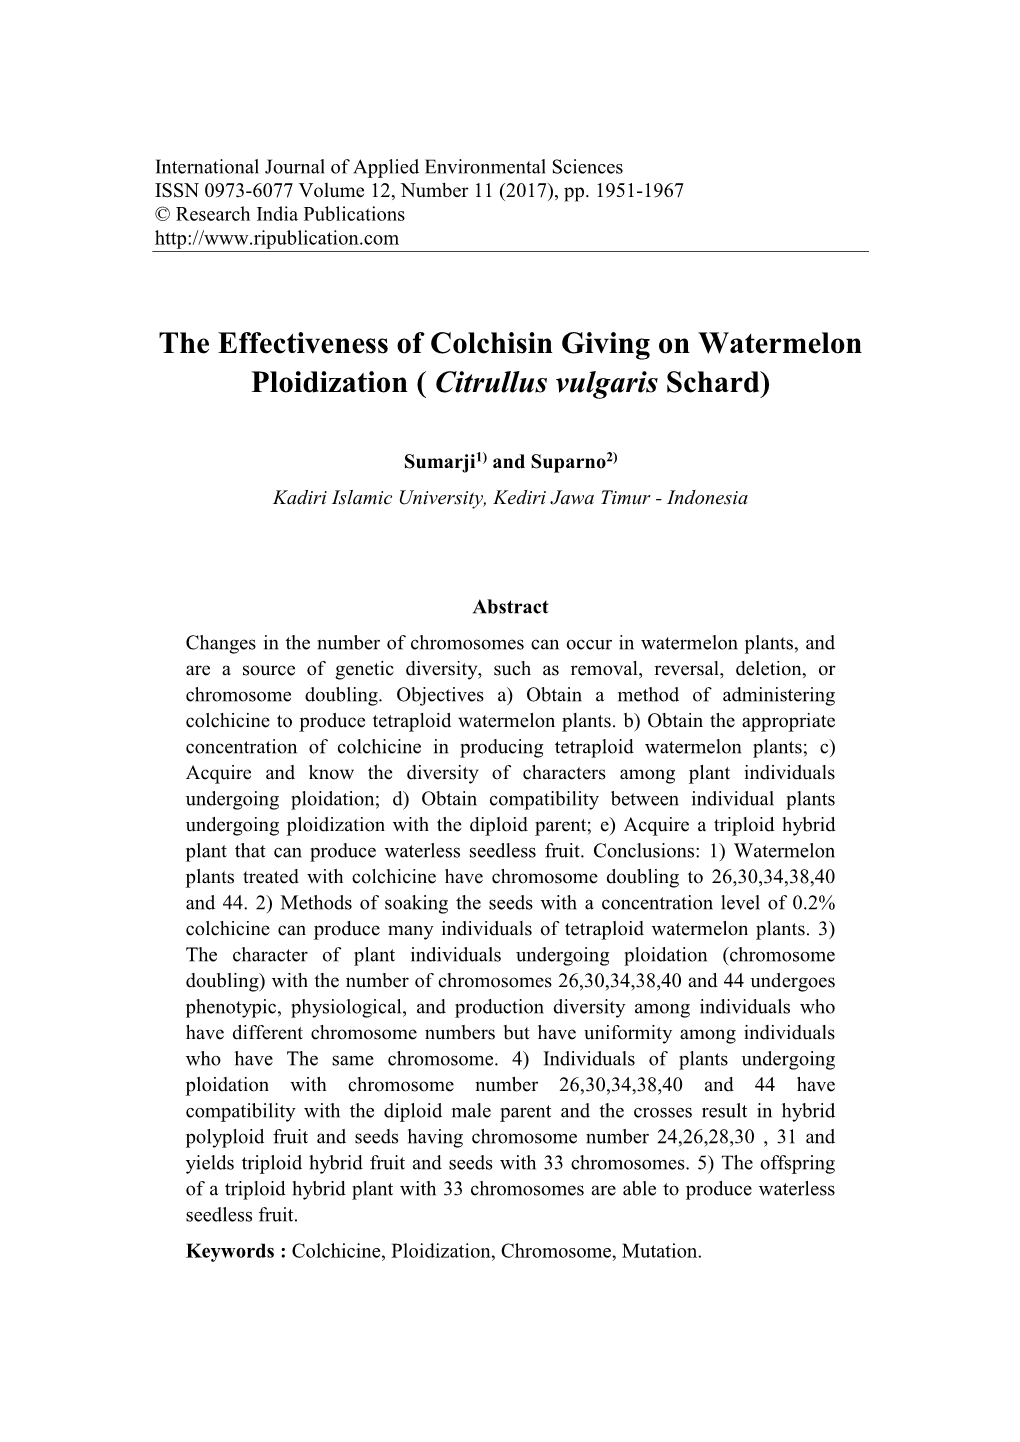 The Effectiveness of Colchisin Giving on Watermelon Ploidization ( Citrullus Vulgaris Schard)